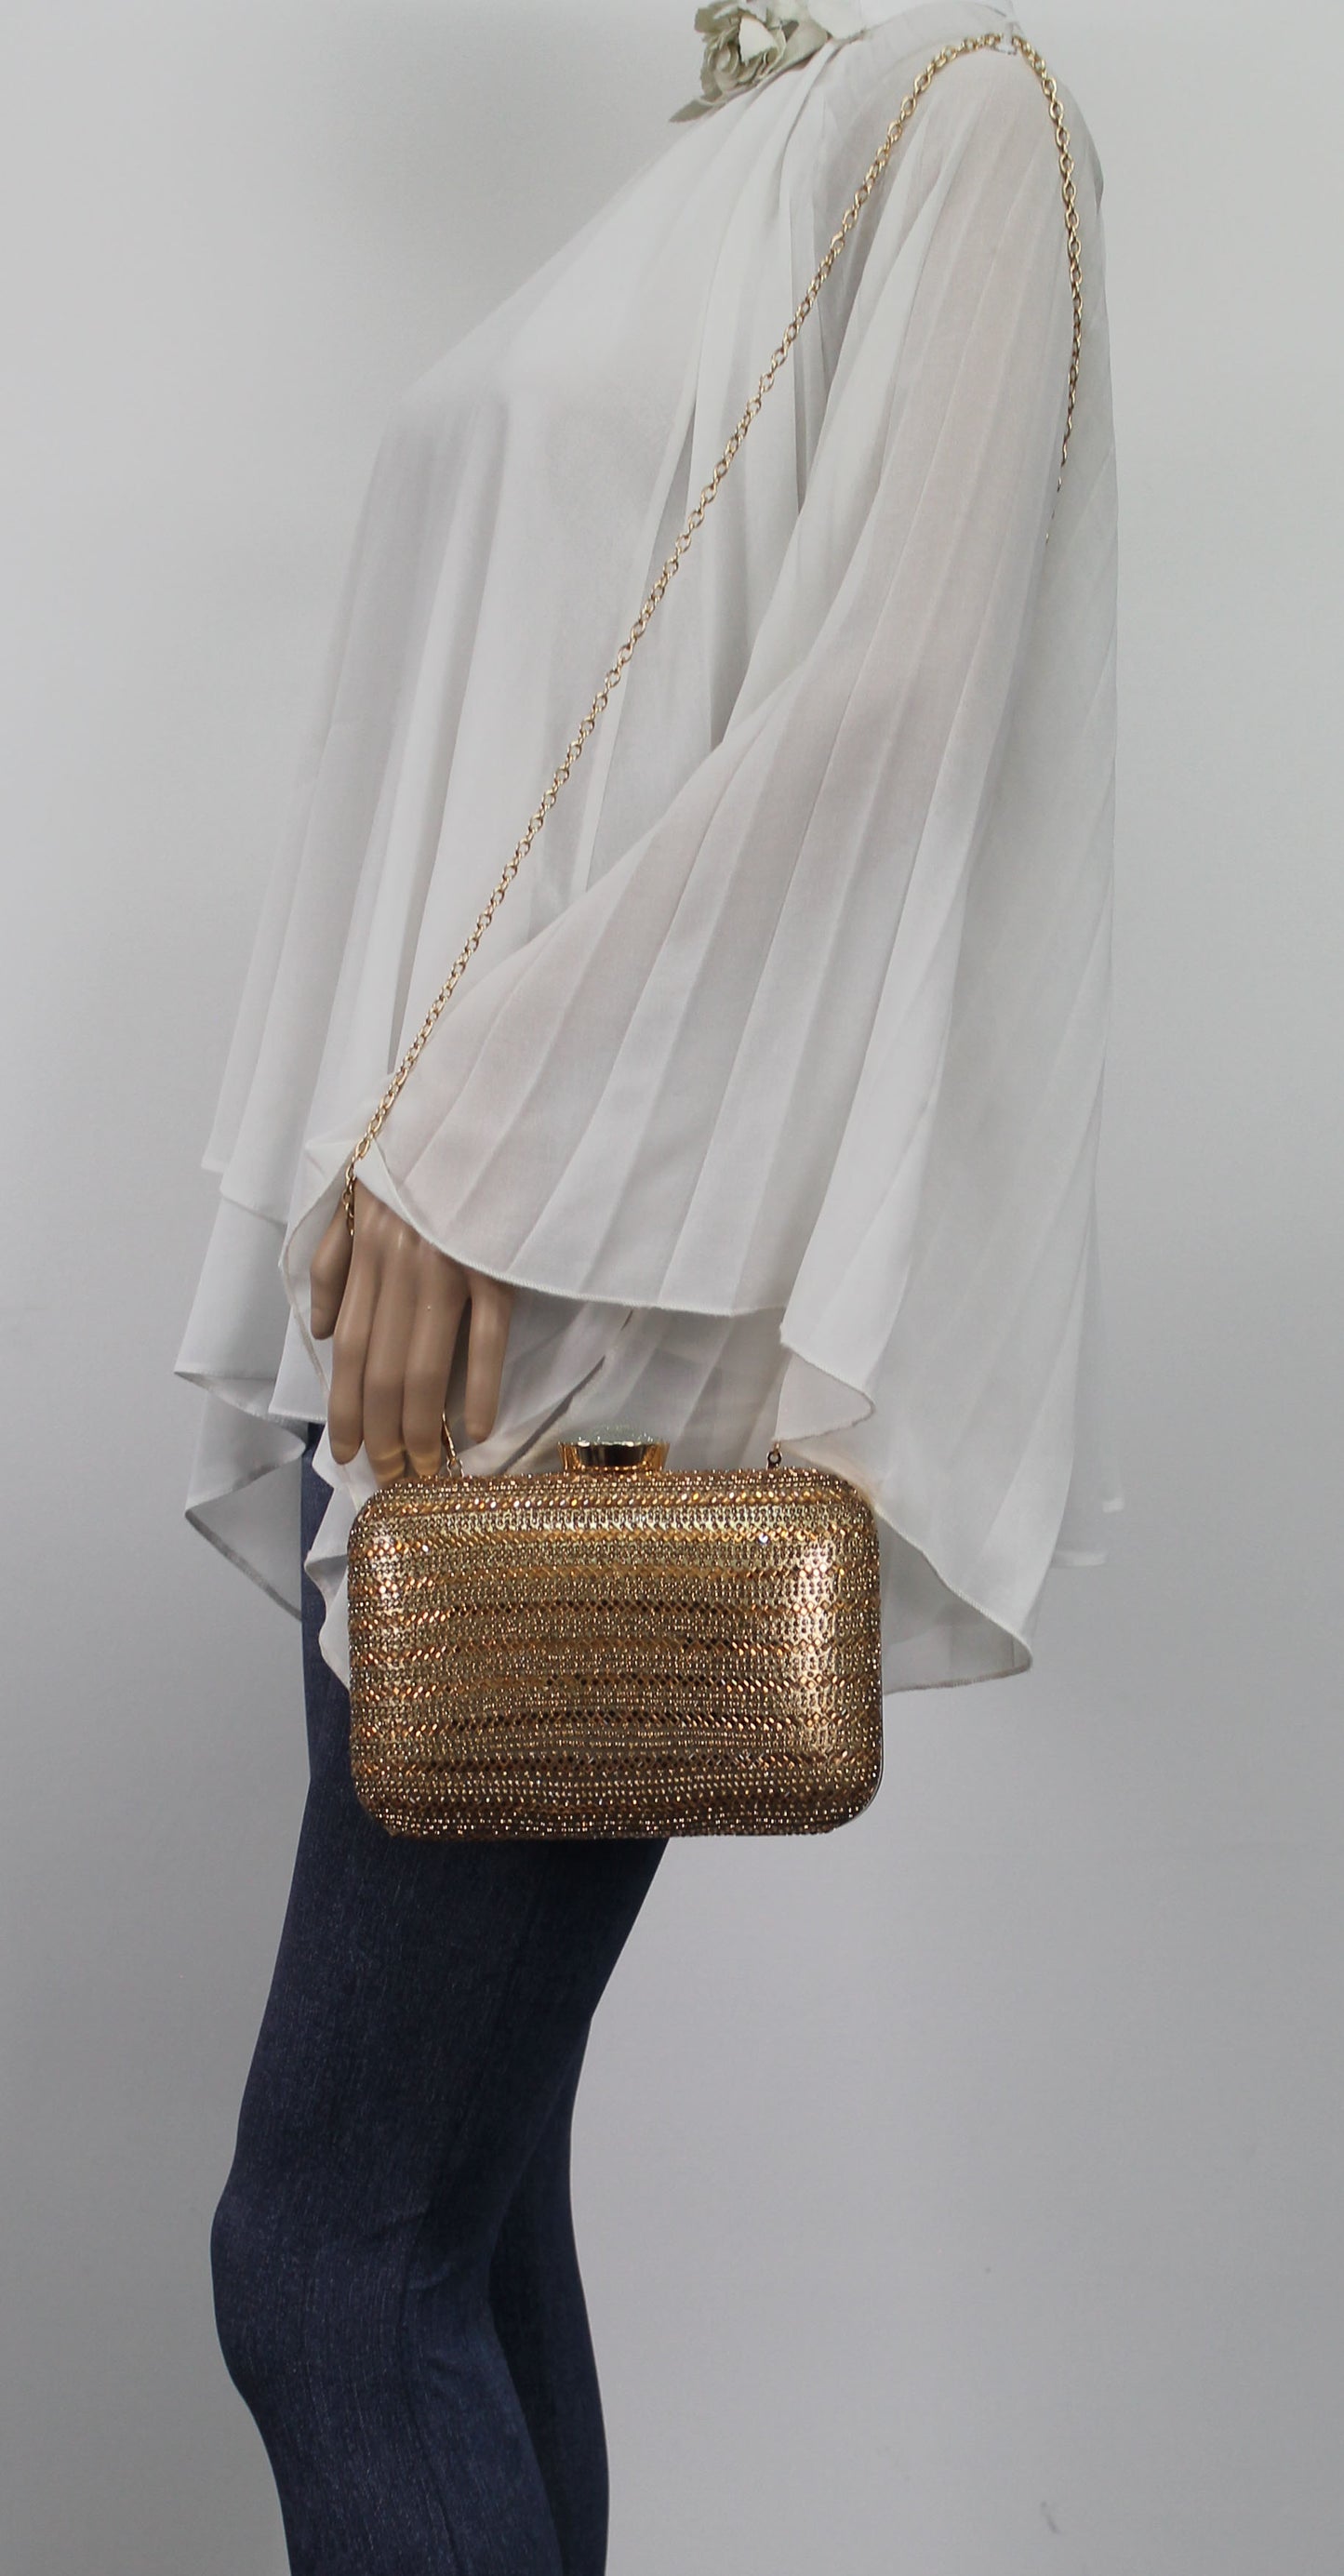 SWANKYSWANS Jane Clutch Bag Gold Cute Cheap Clutch Bag For Weddings School and Work